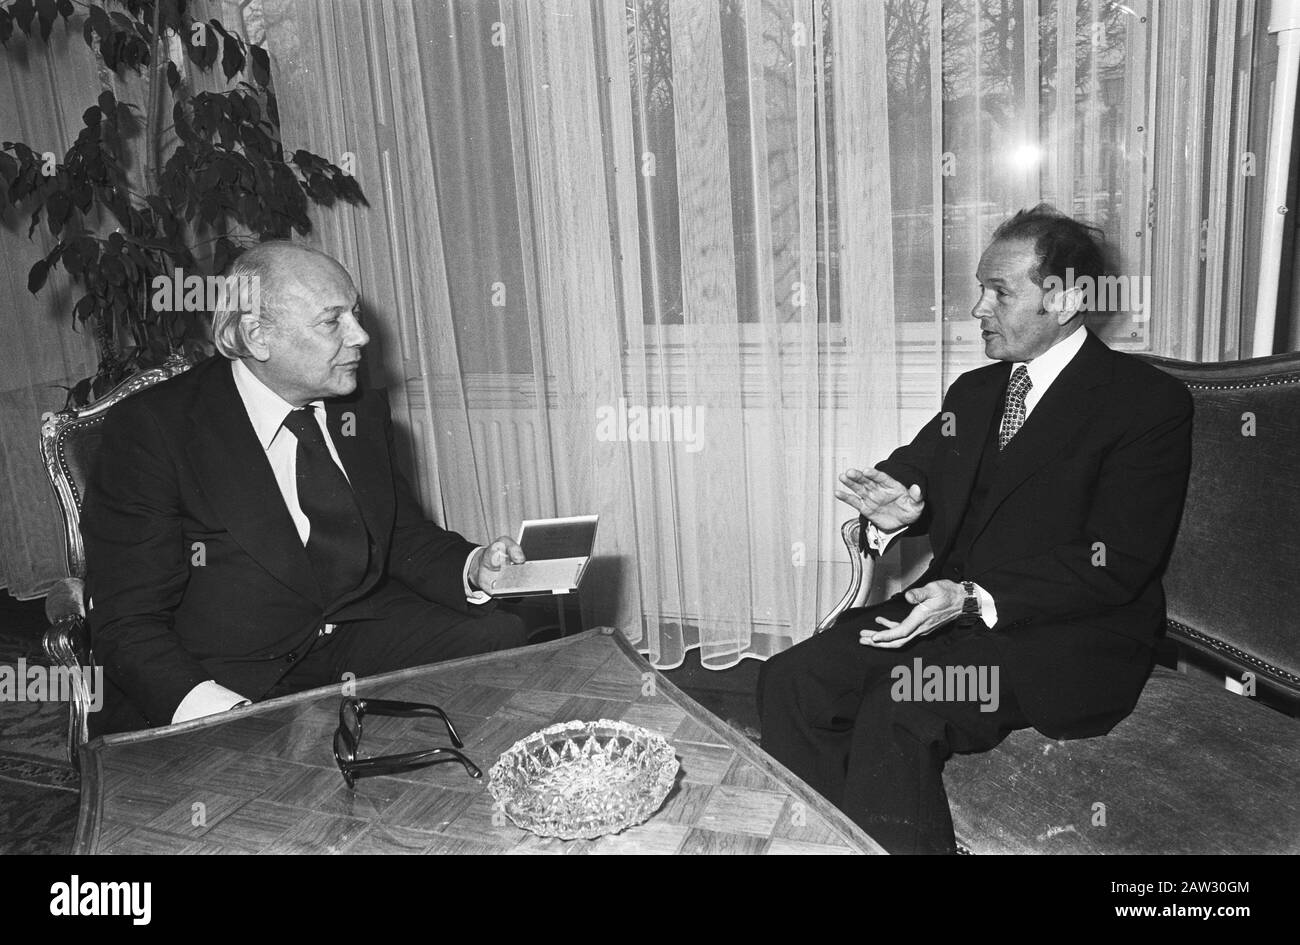 Prime Minister Den Uyl receives Minister of Foreign Affairs GDR, Oskar Fischer; Fischer (head) Date: January 24, 1977 Location: DDR, Germany Keywords: revenue Person Name: Fischer, Uyl, Joop den Stock Photo